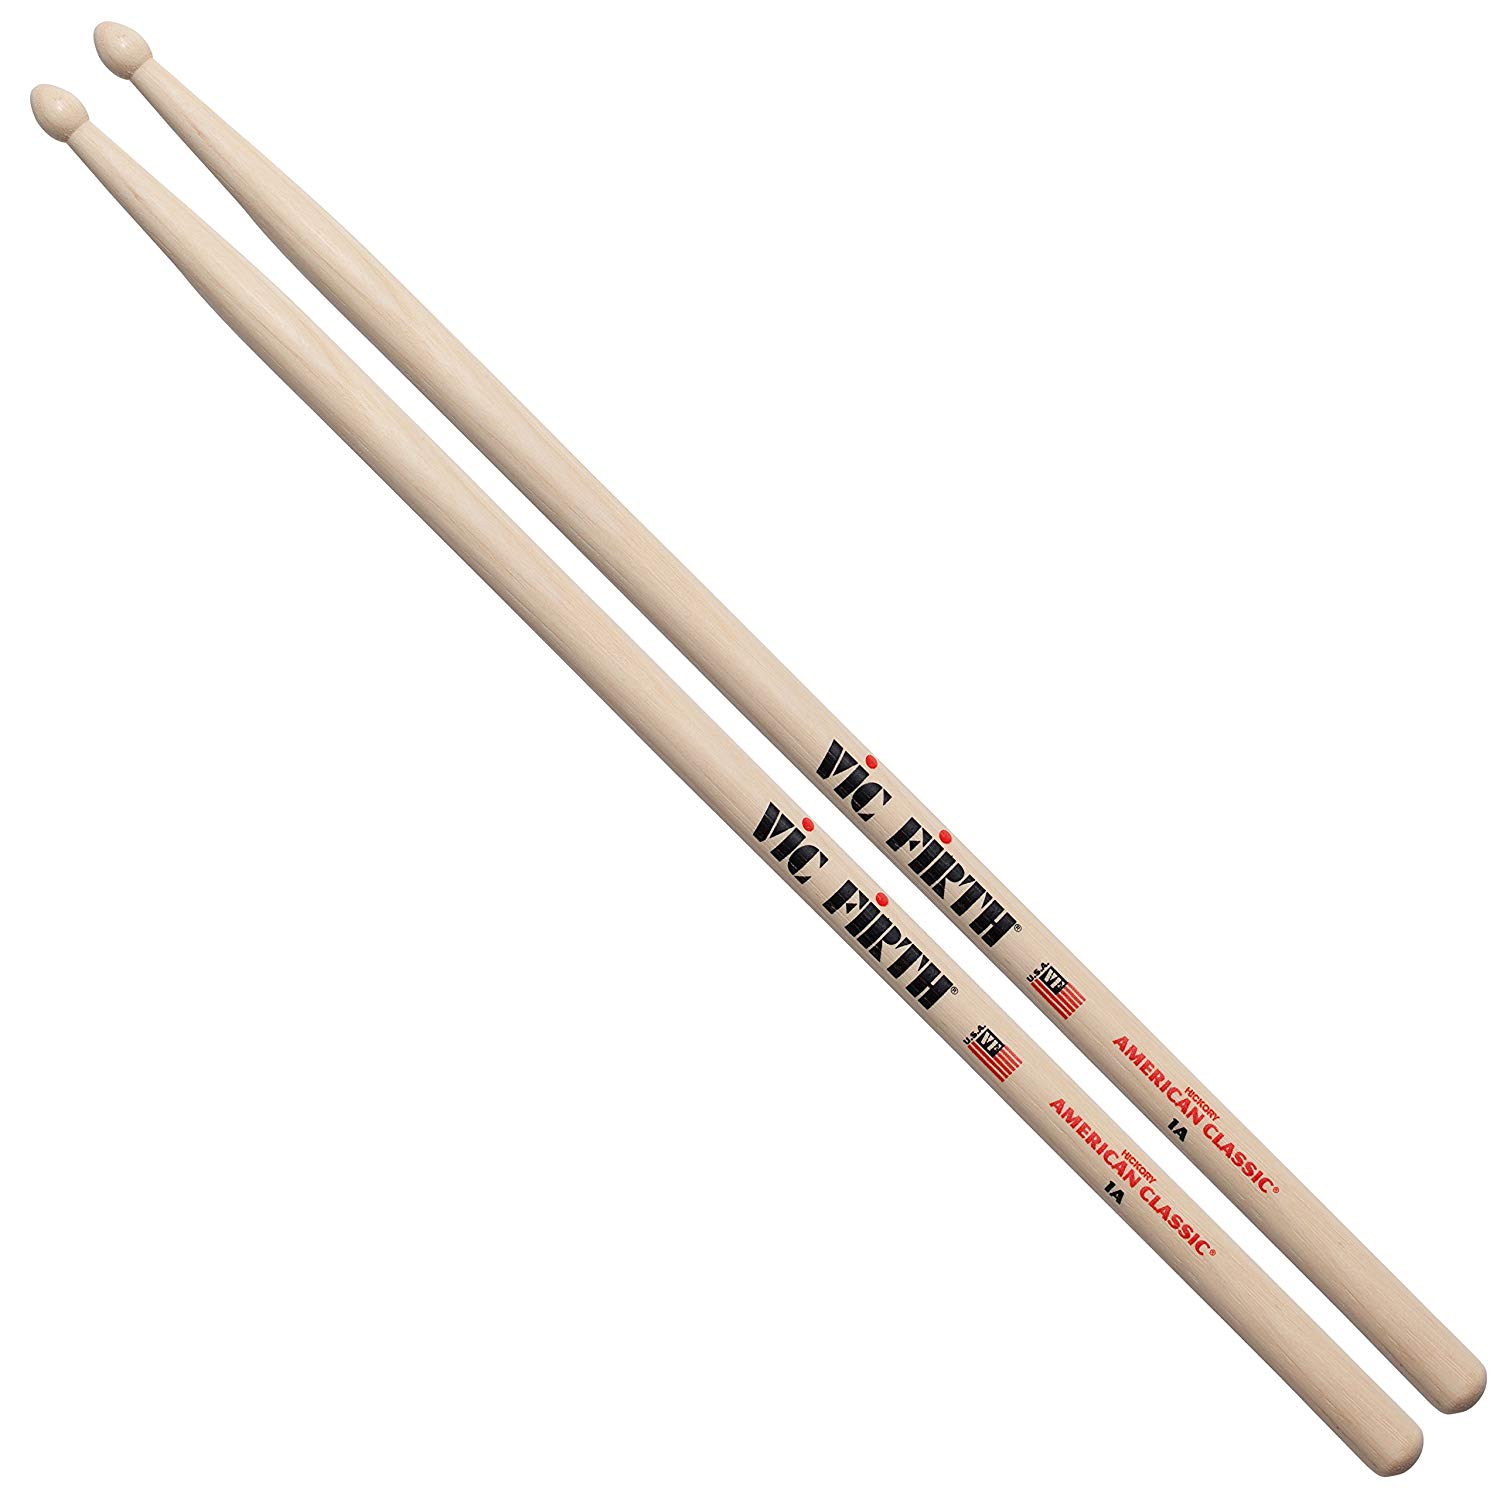 Nova 5a Hickory - Olive Bois - Drum stick - Variation 2